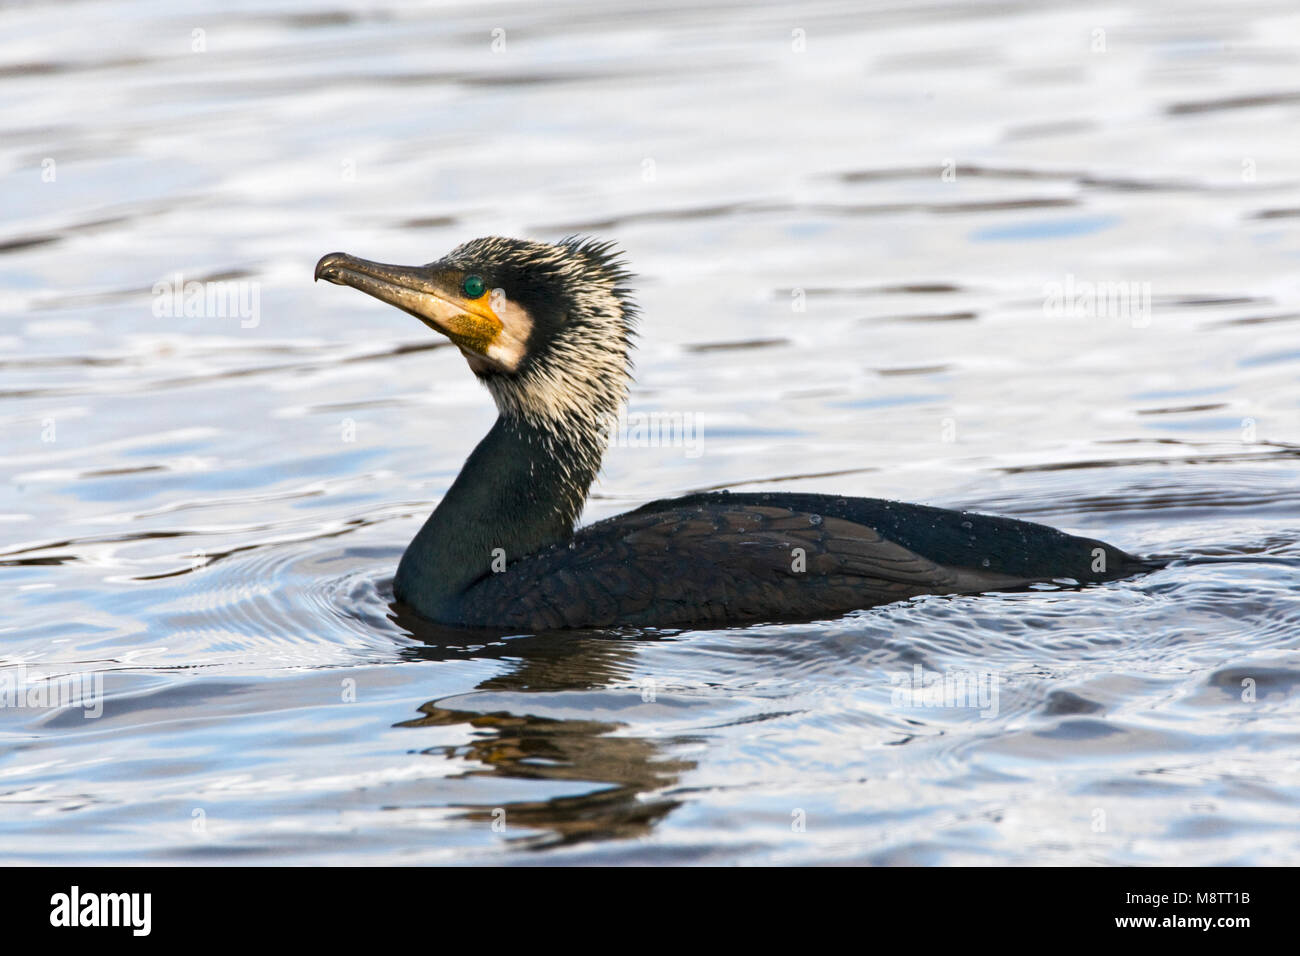 Zwemmende Aalscholver; Swimming Great Cormorant Stock Photo